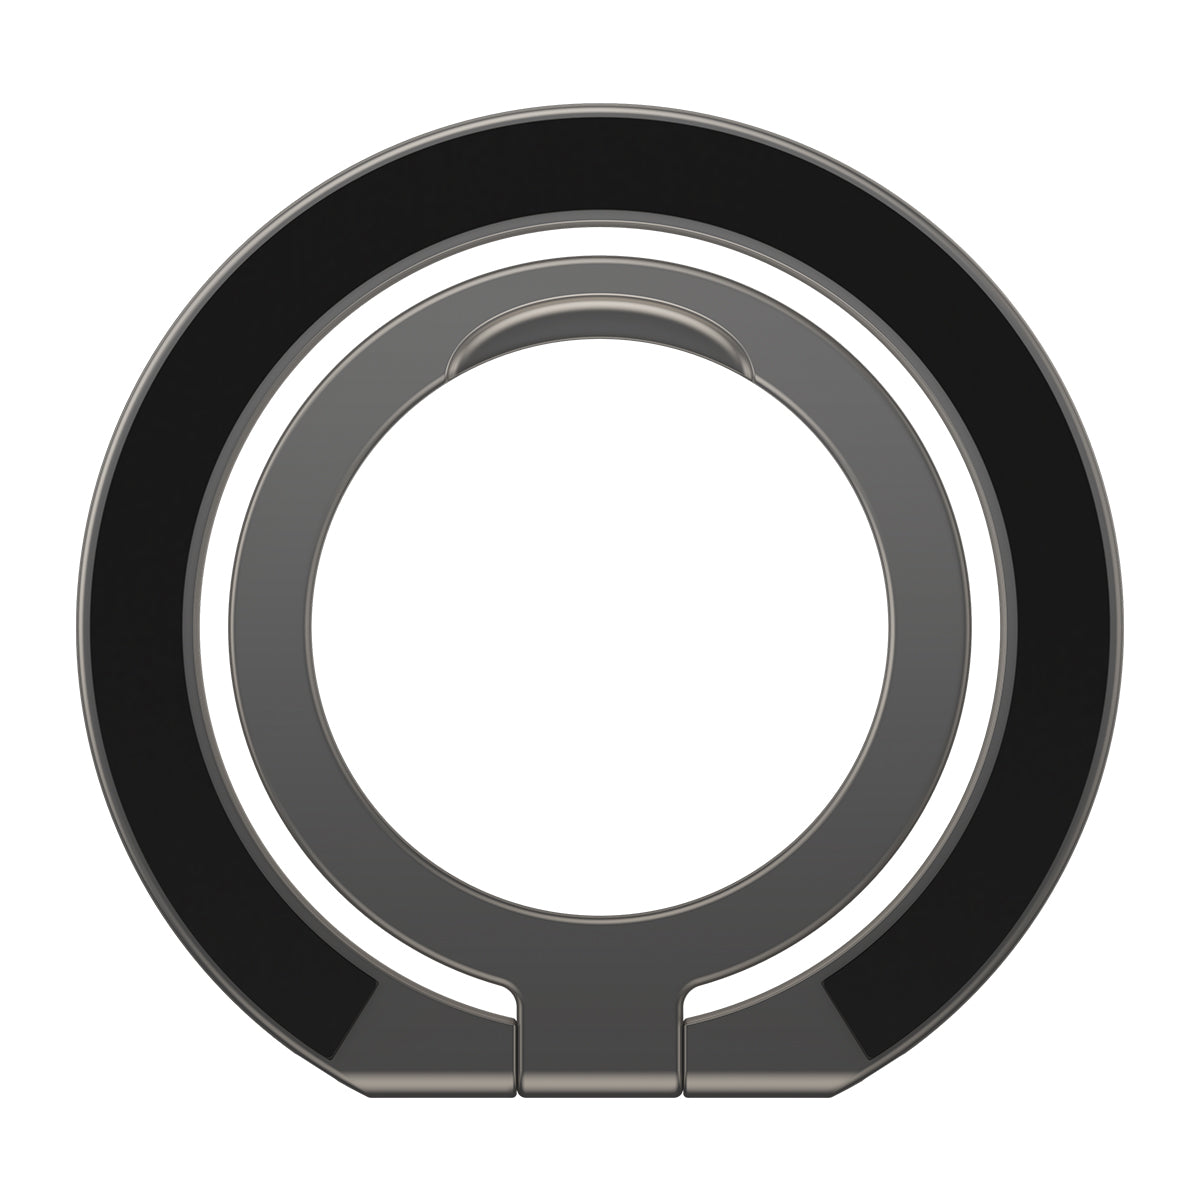 Baseus Halo Series Foldable Metal Ring Stand